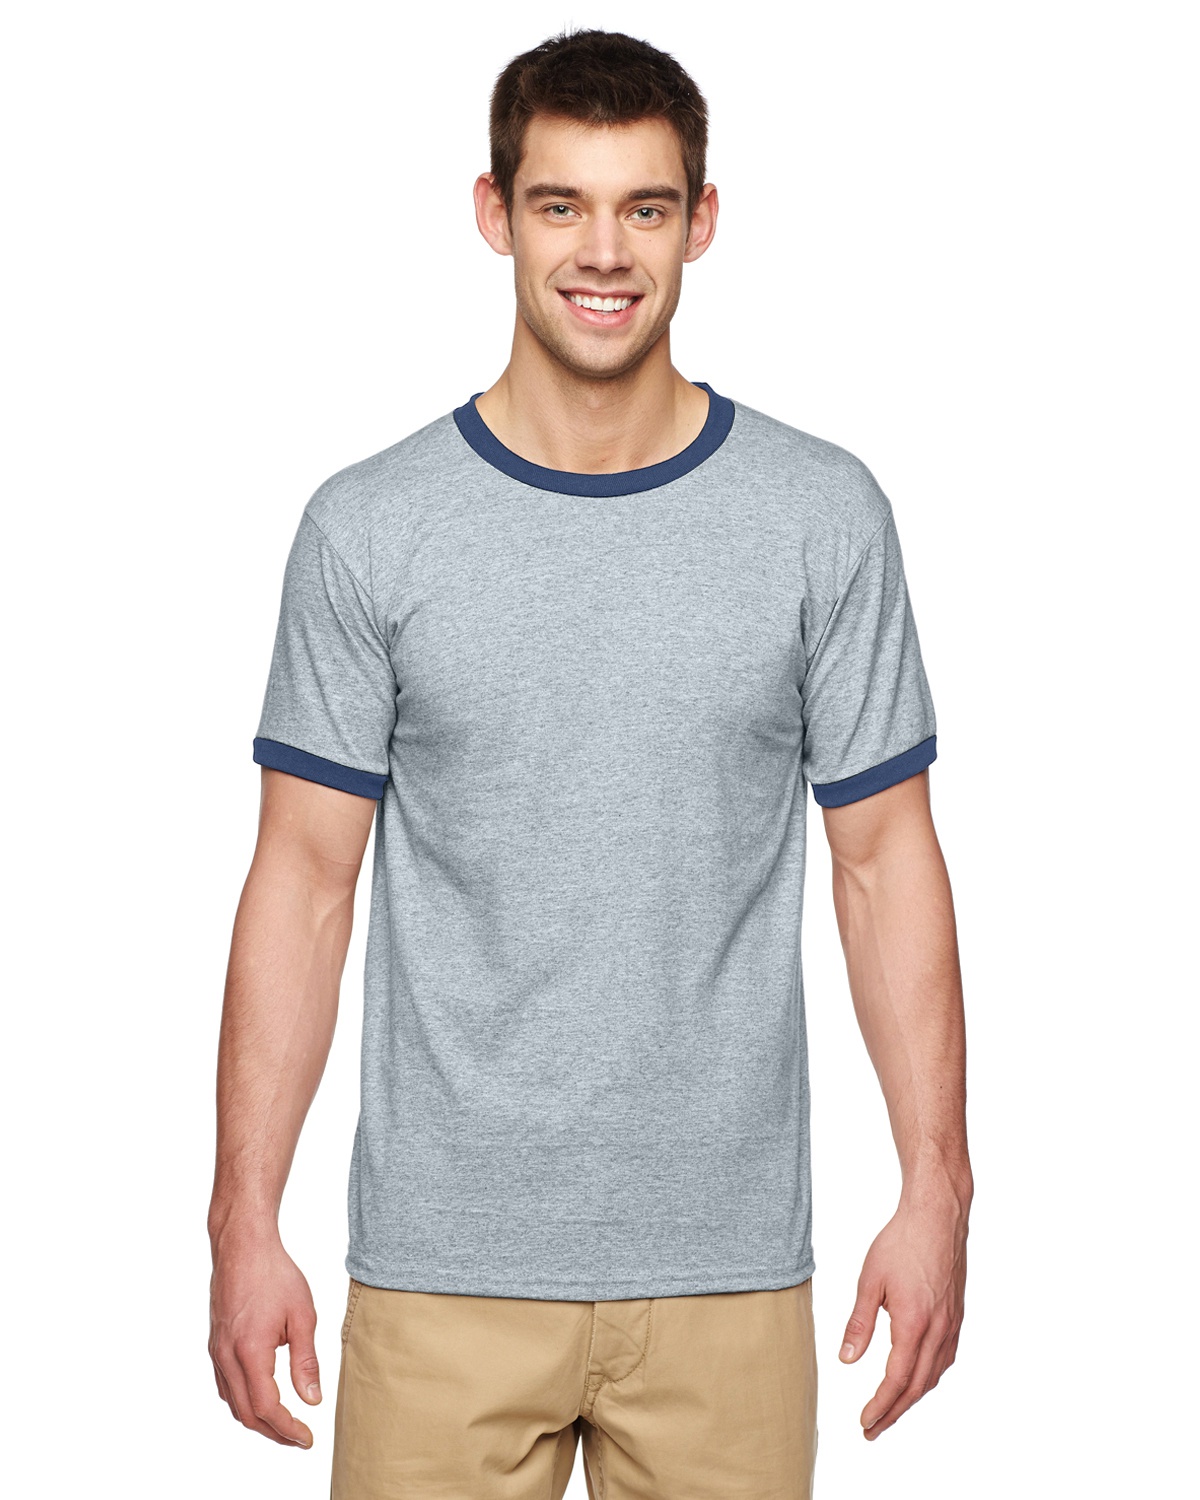 wholesale-gildan-g860-buy-adult-ringer-t-shirt-veetrends